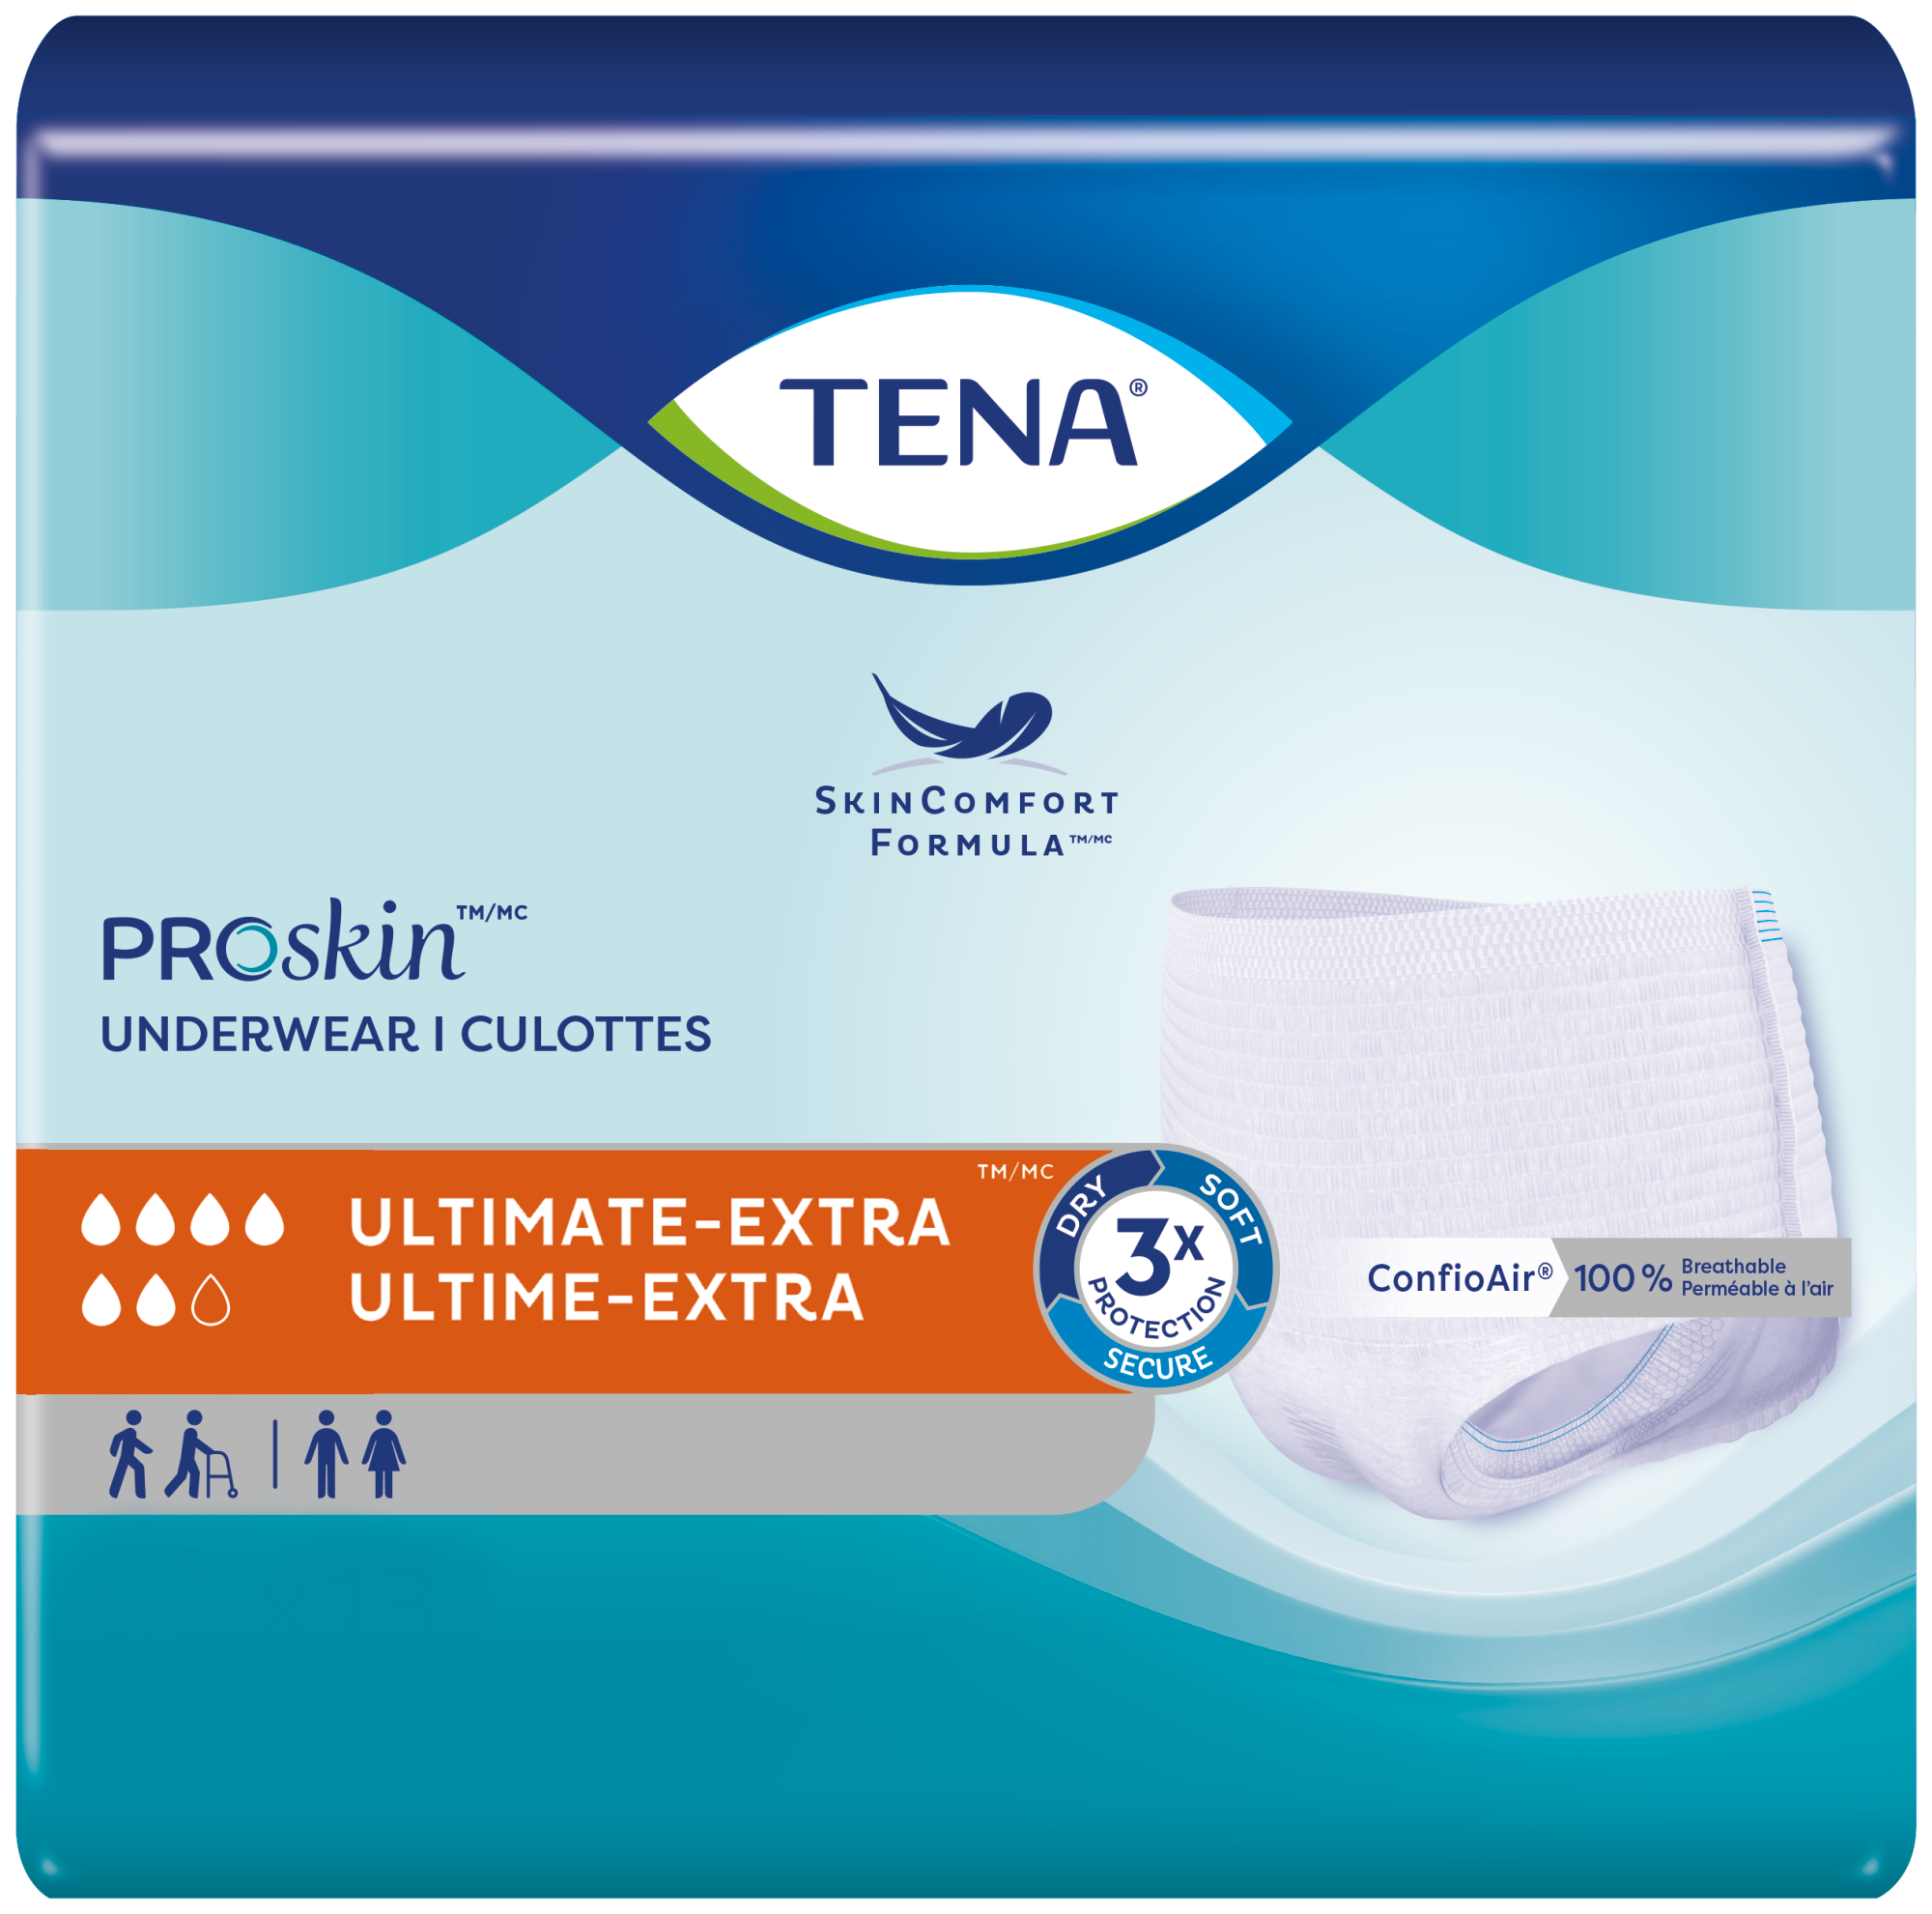 https://tena-images.essity.com/images-c5/214/430214/optimized-AzurePNG2K/tena-proskin-ultimate-extra-underwear-pack-ca.png